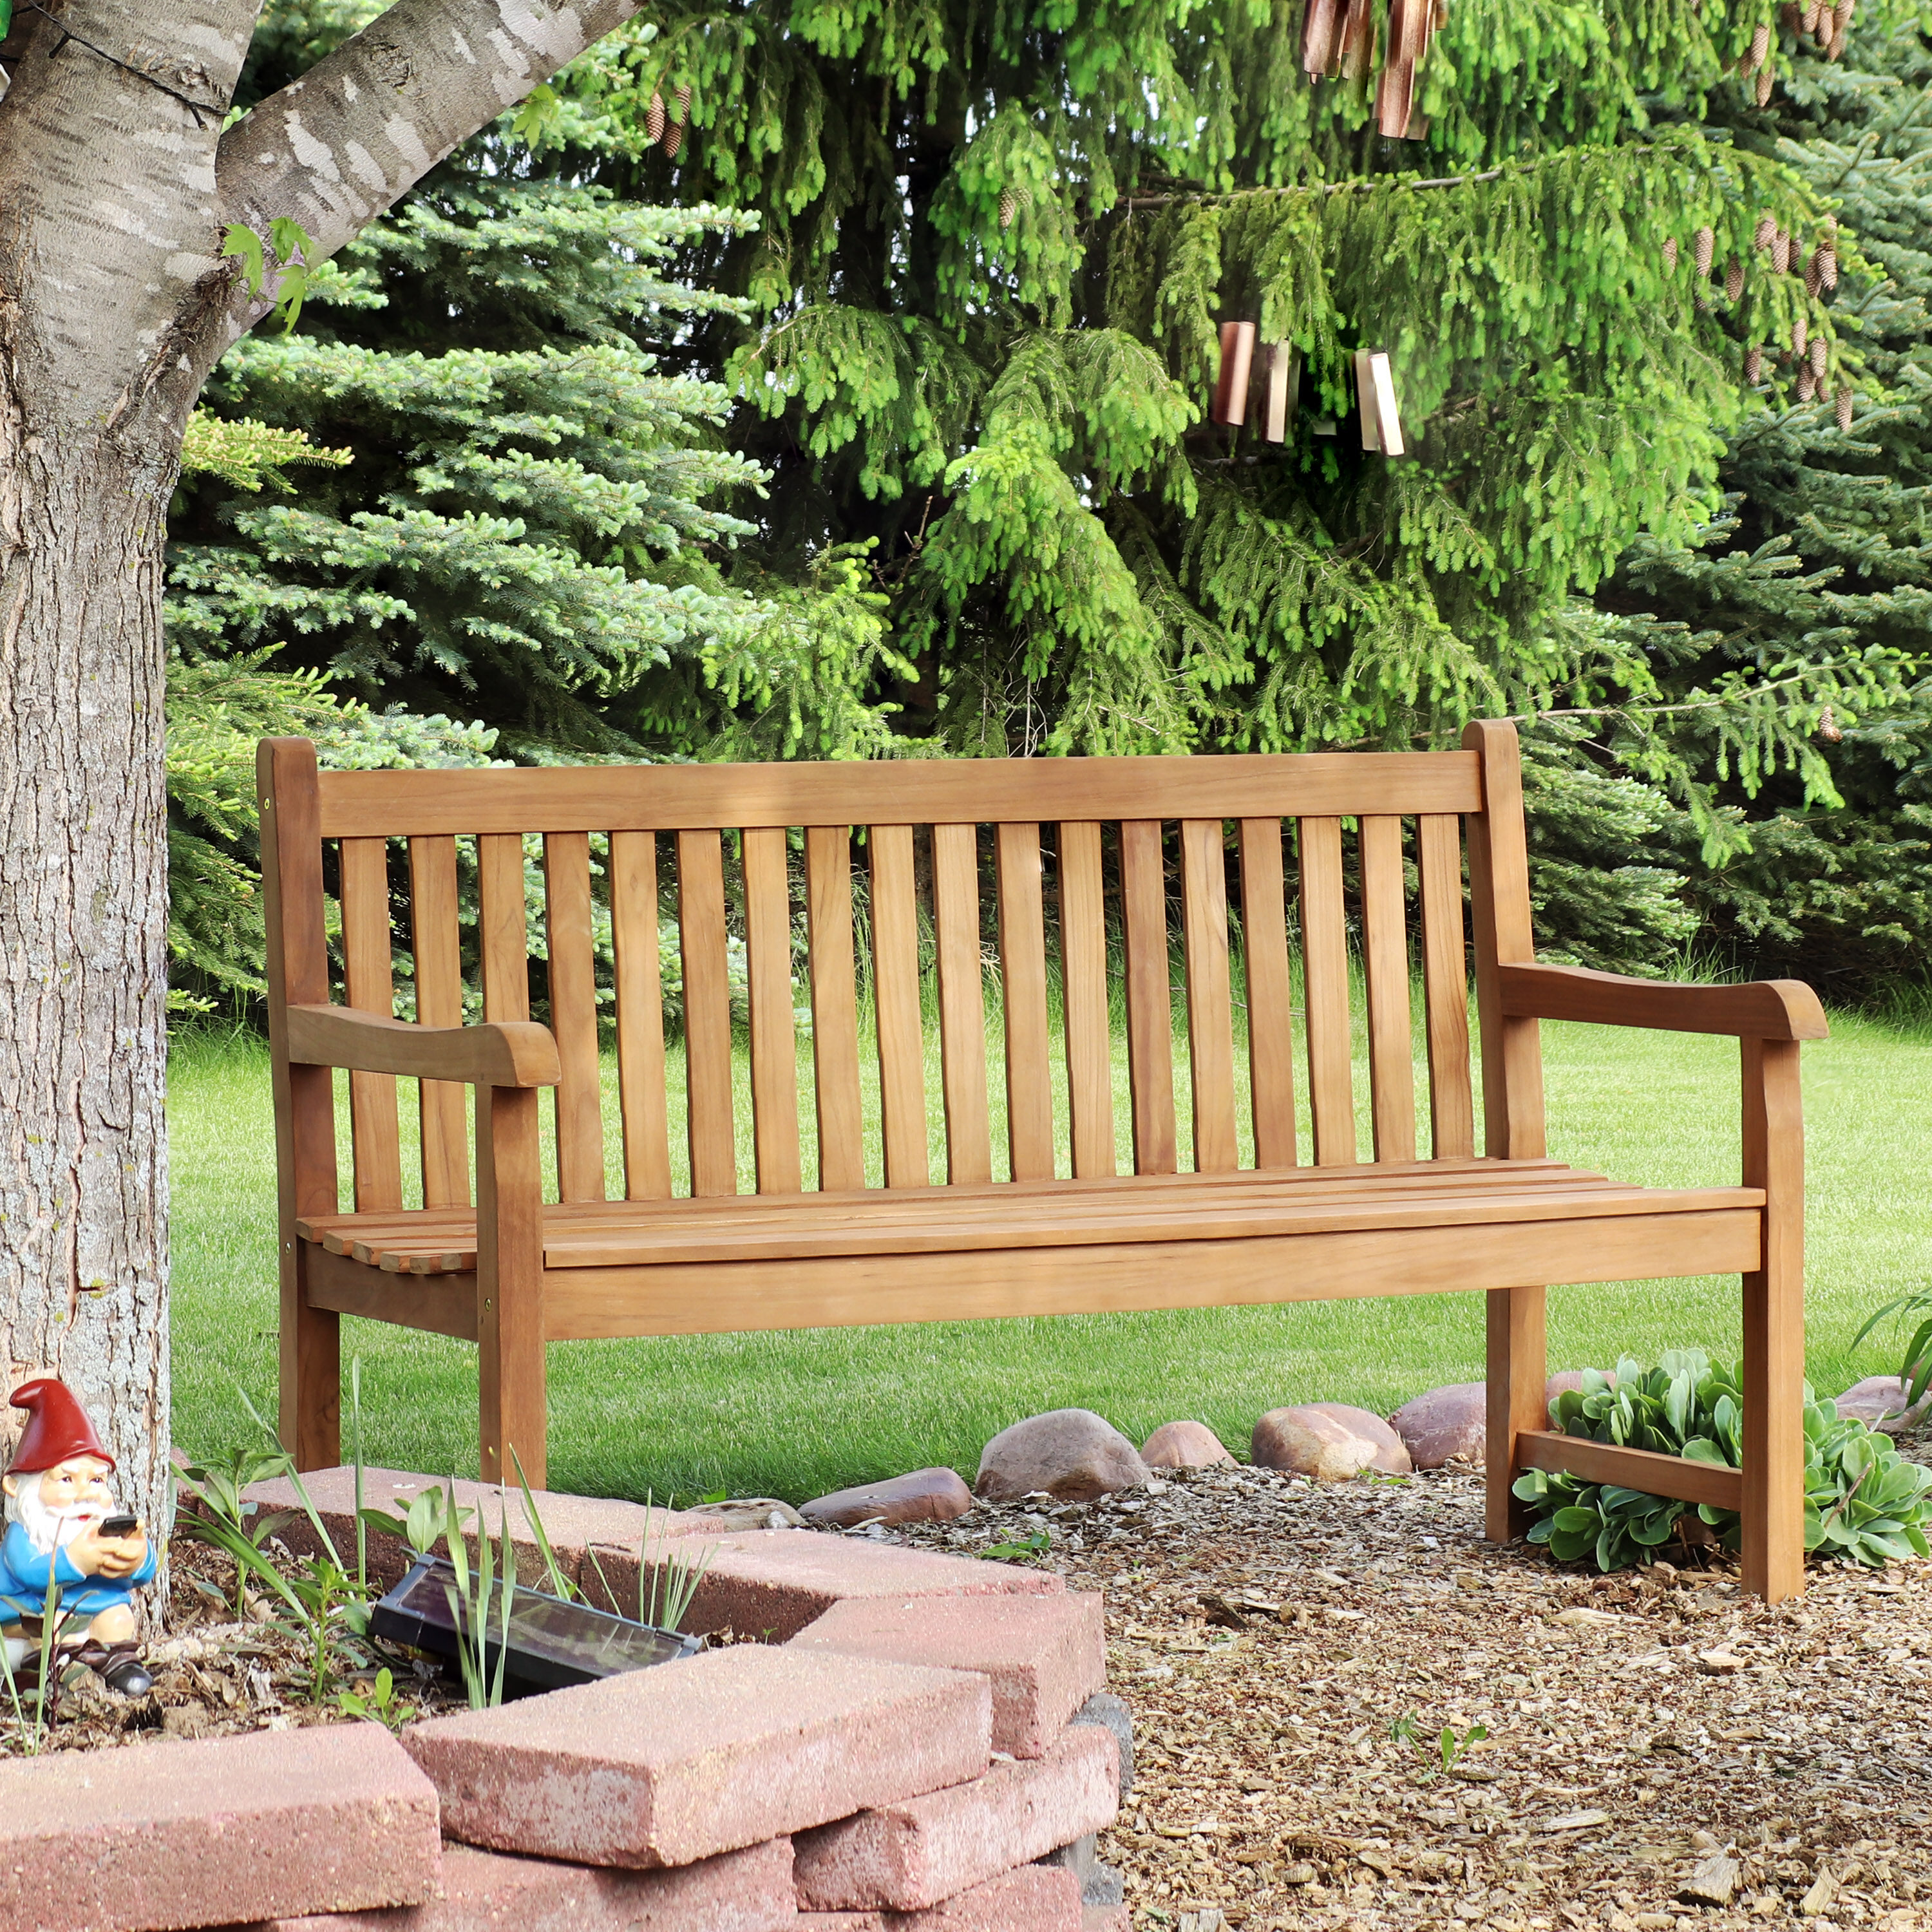 Teak Garden Bench In The Patio Benches